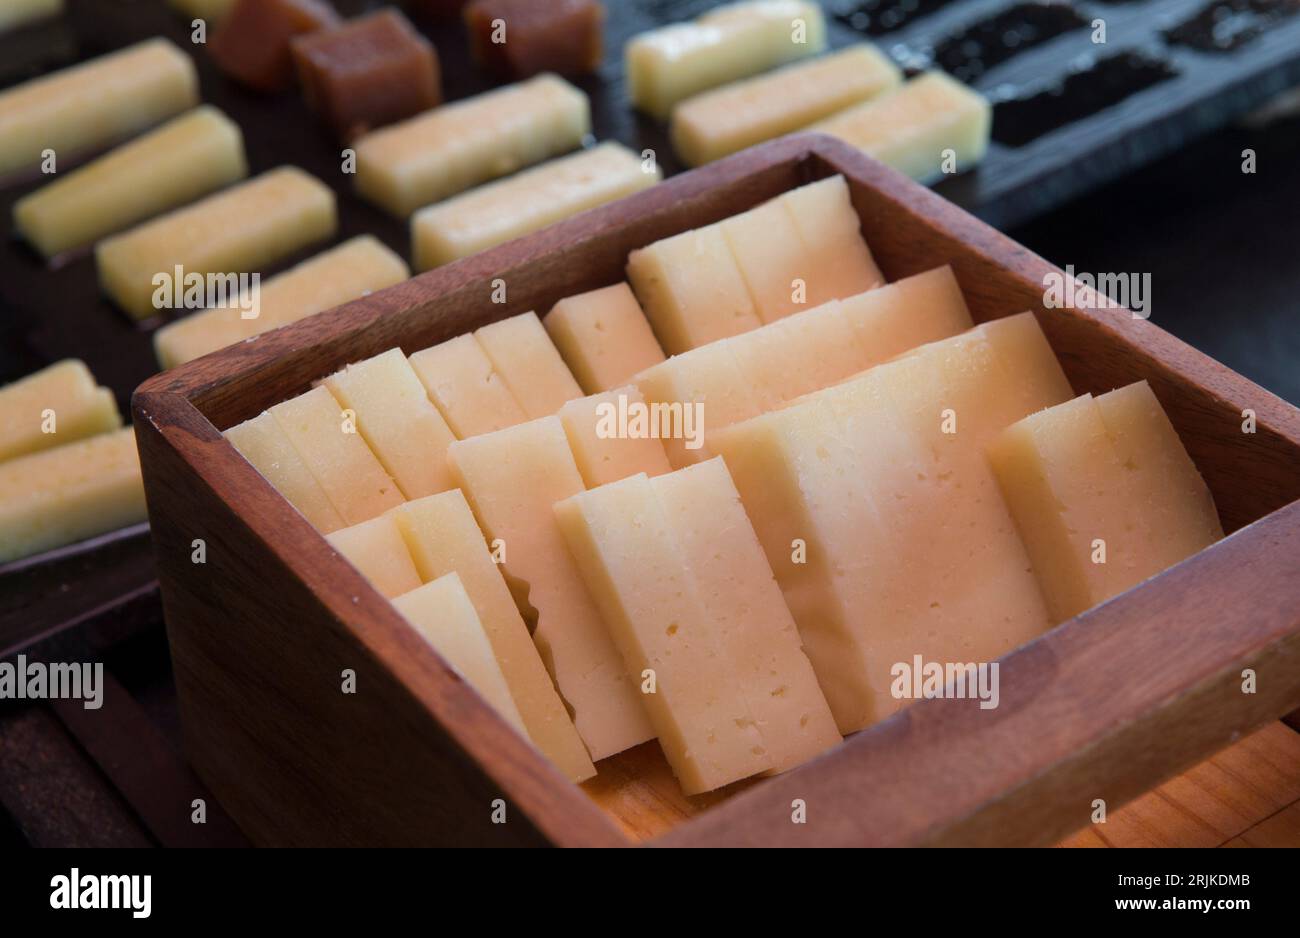 Tiras de queso de oveja exhibidas en caja de madera. Primer plano. Foto de stock